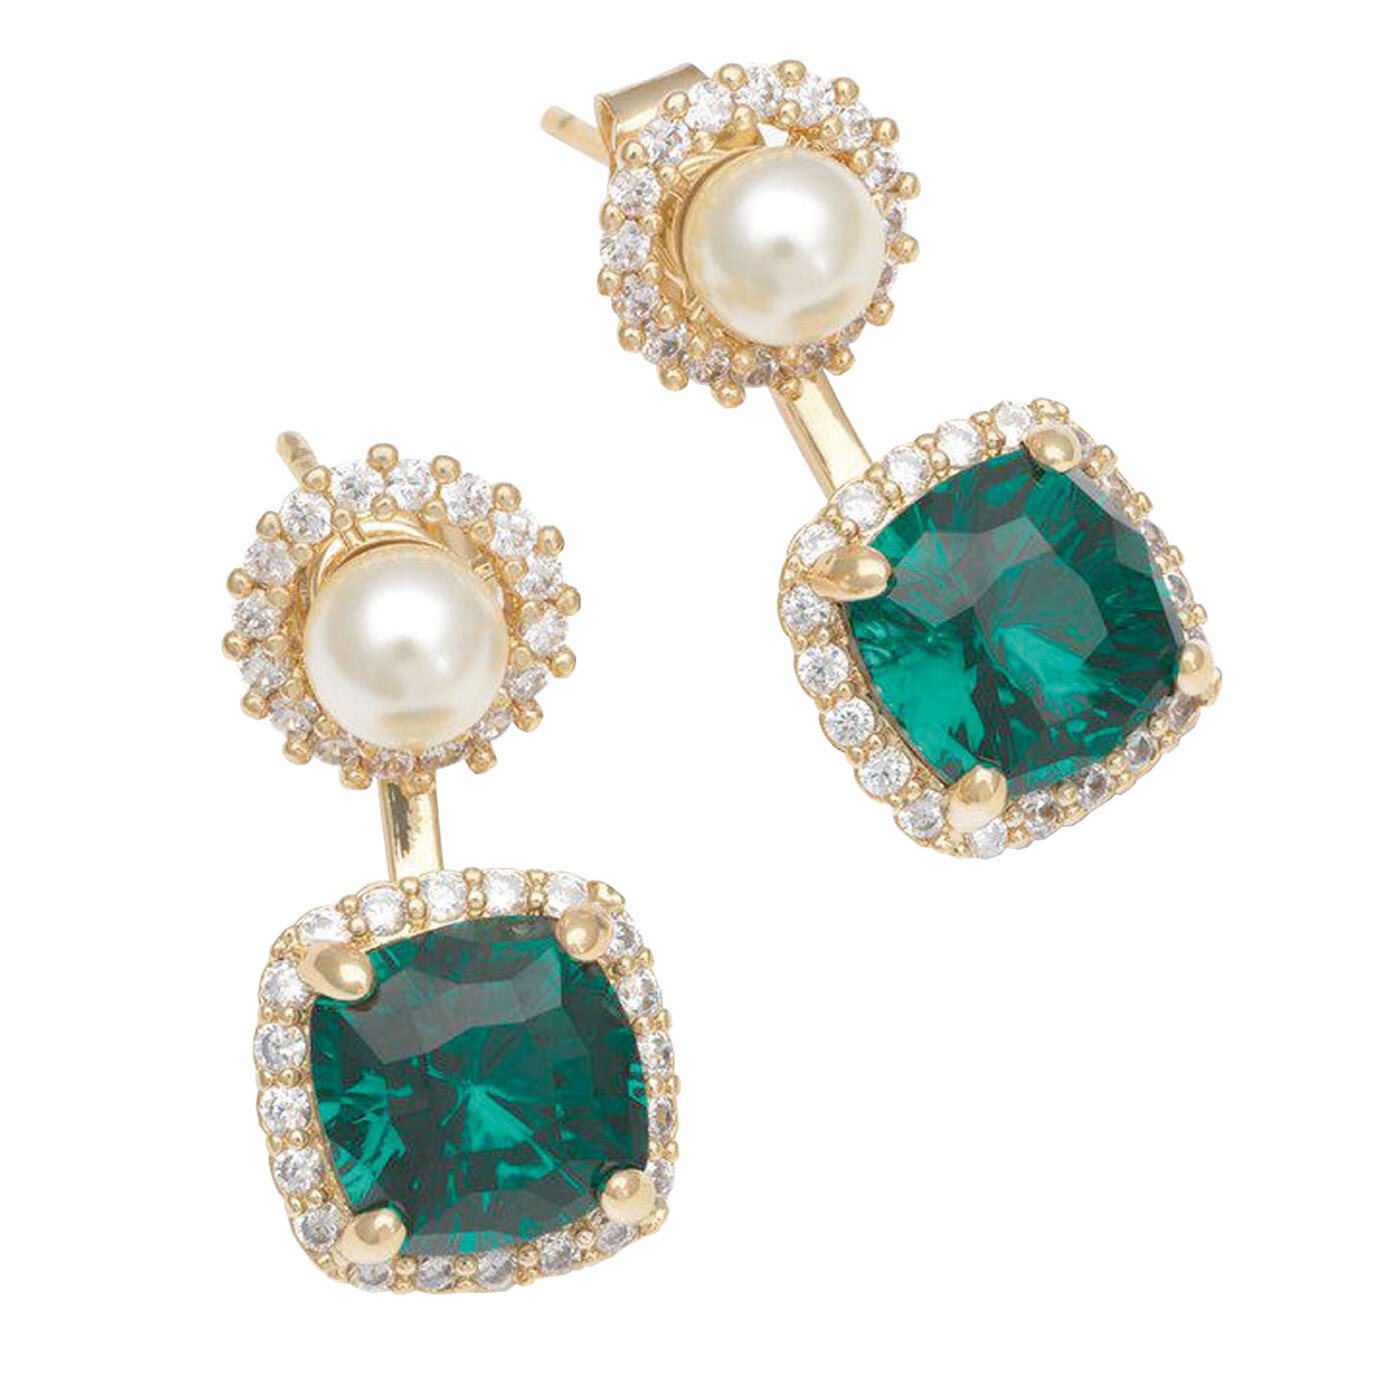 Colette earrings - Emerald square